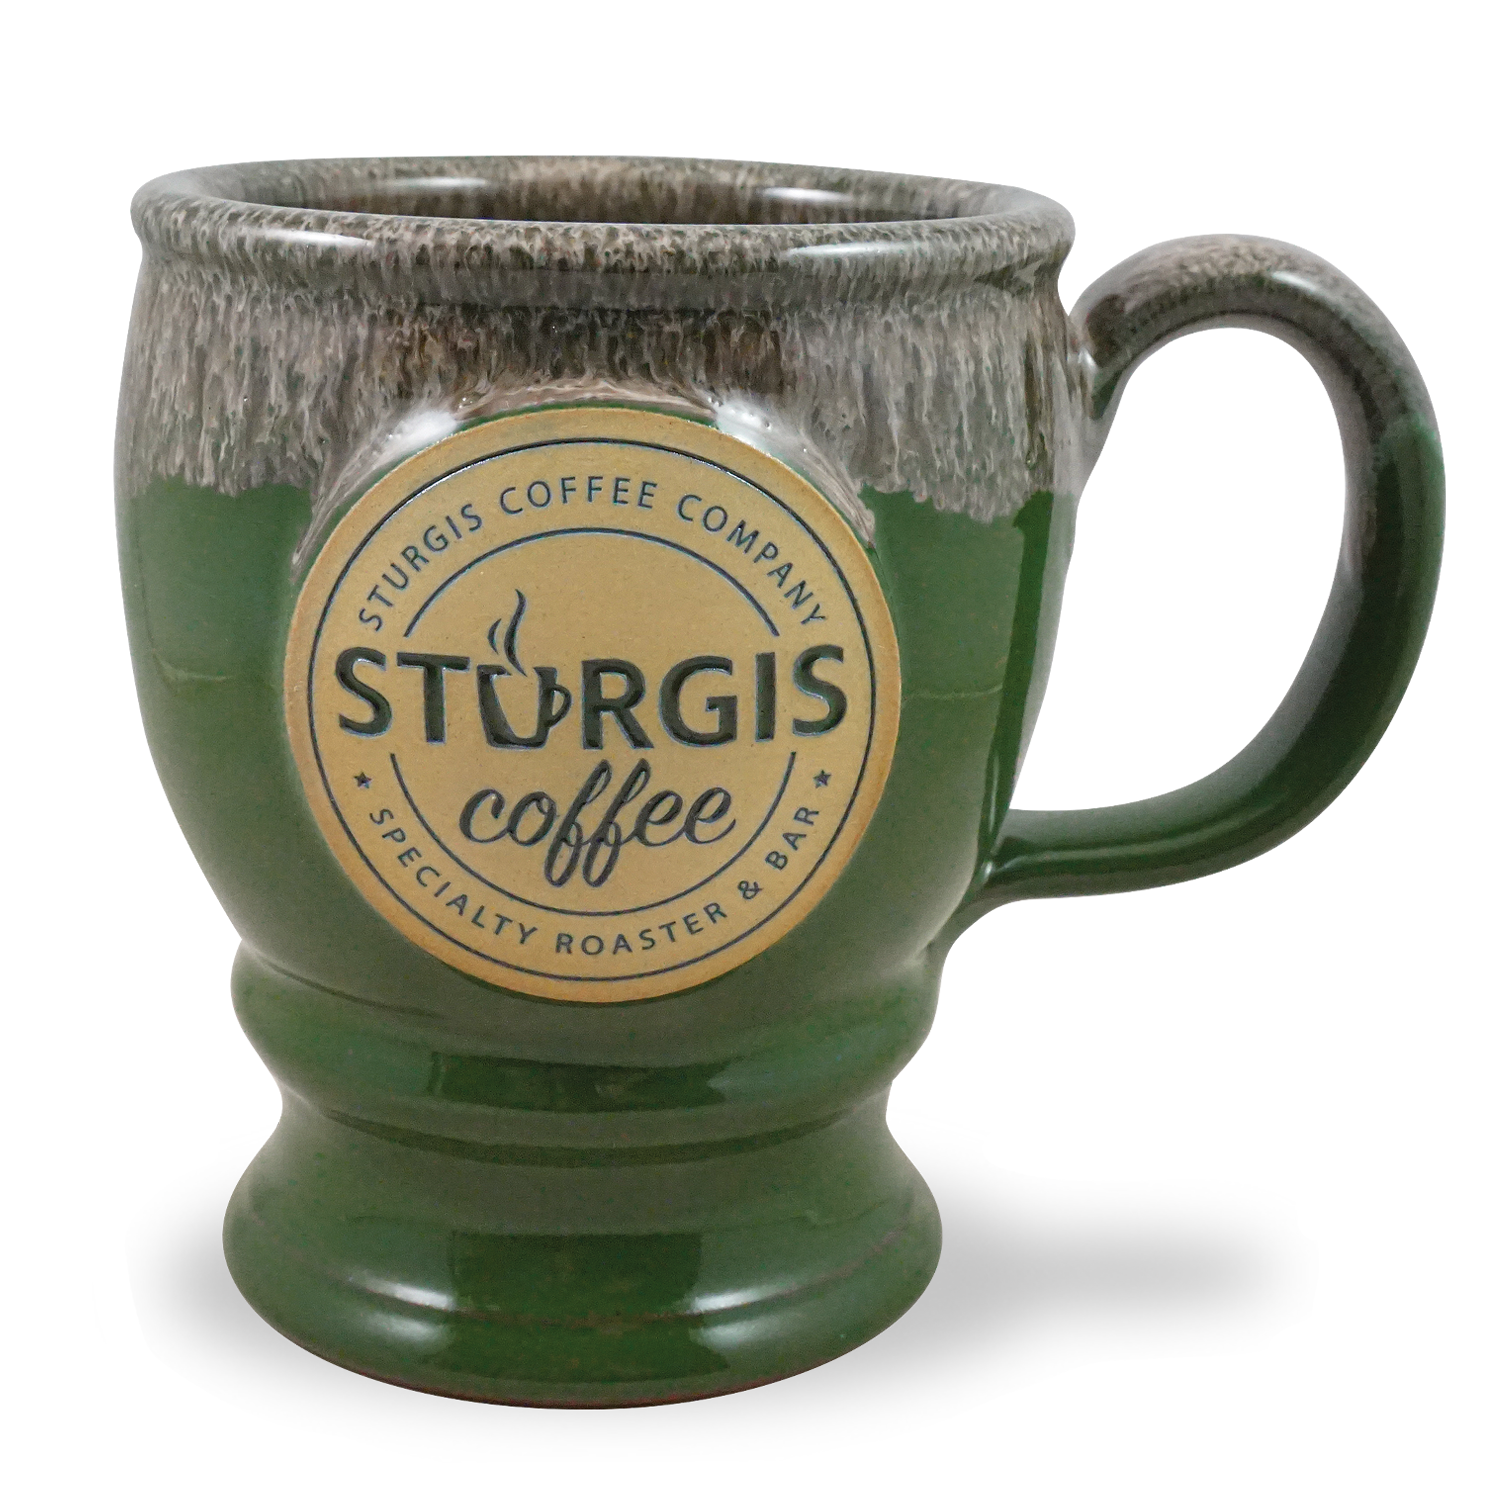 Sturgis Coffee Co.